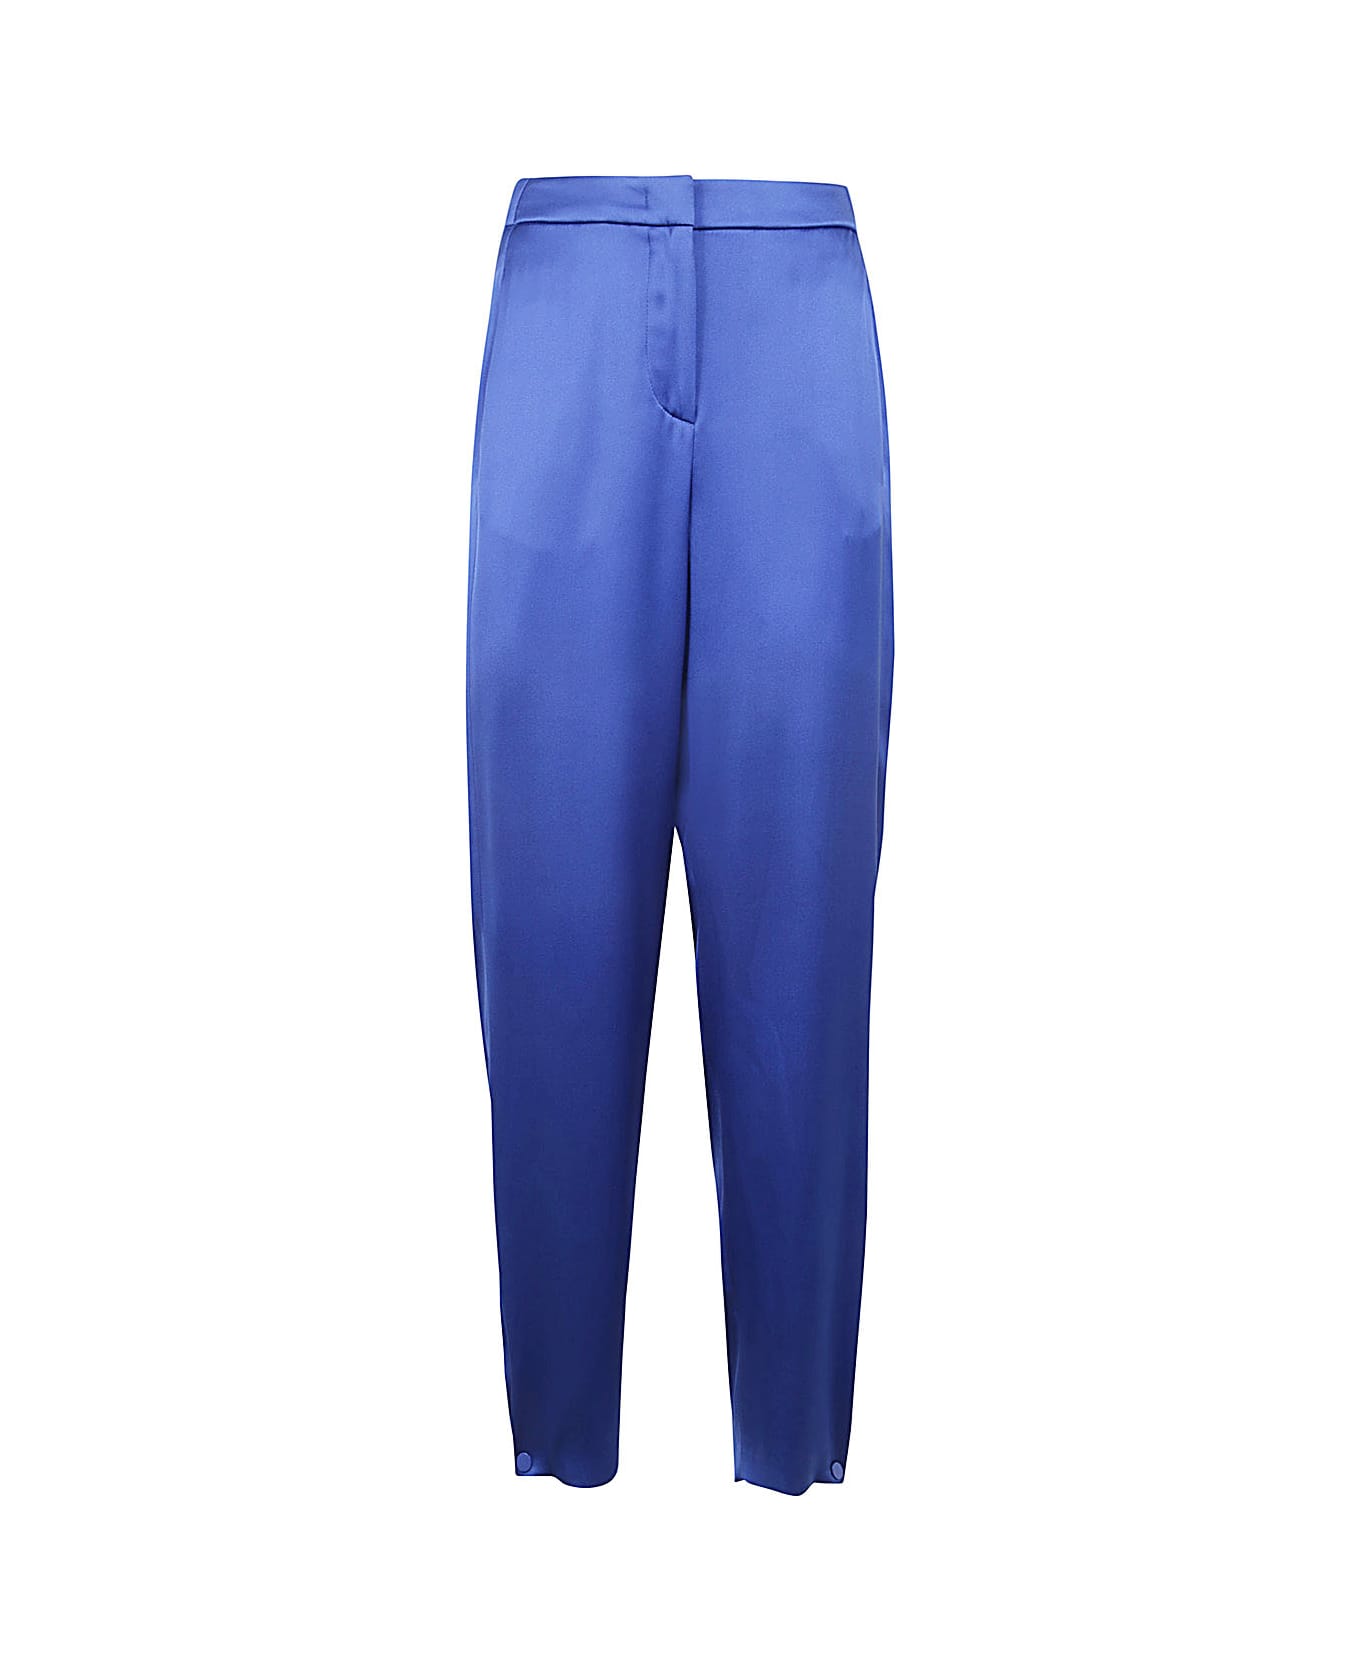 Giorgio Armani Elastic Waist Pants With Button On Bottom - Ubpa Bluette